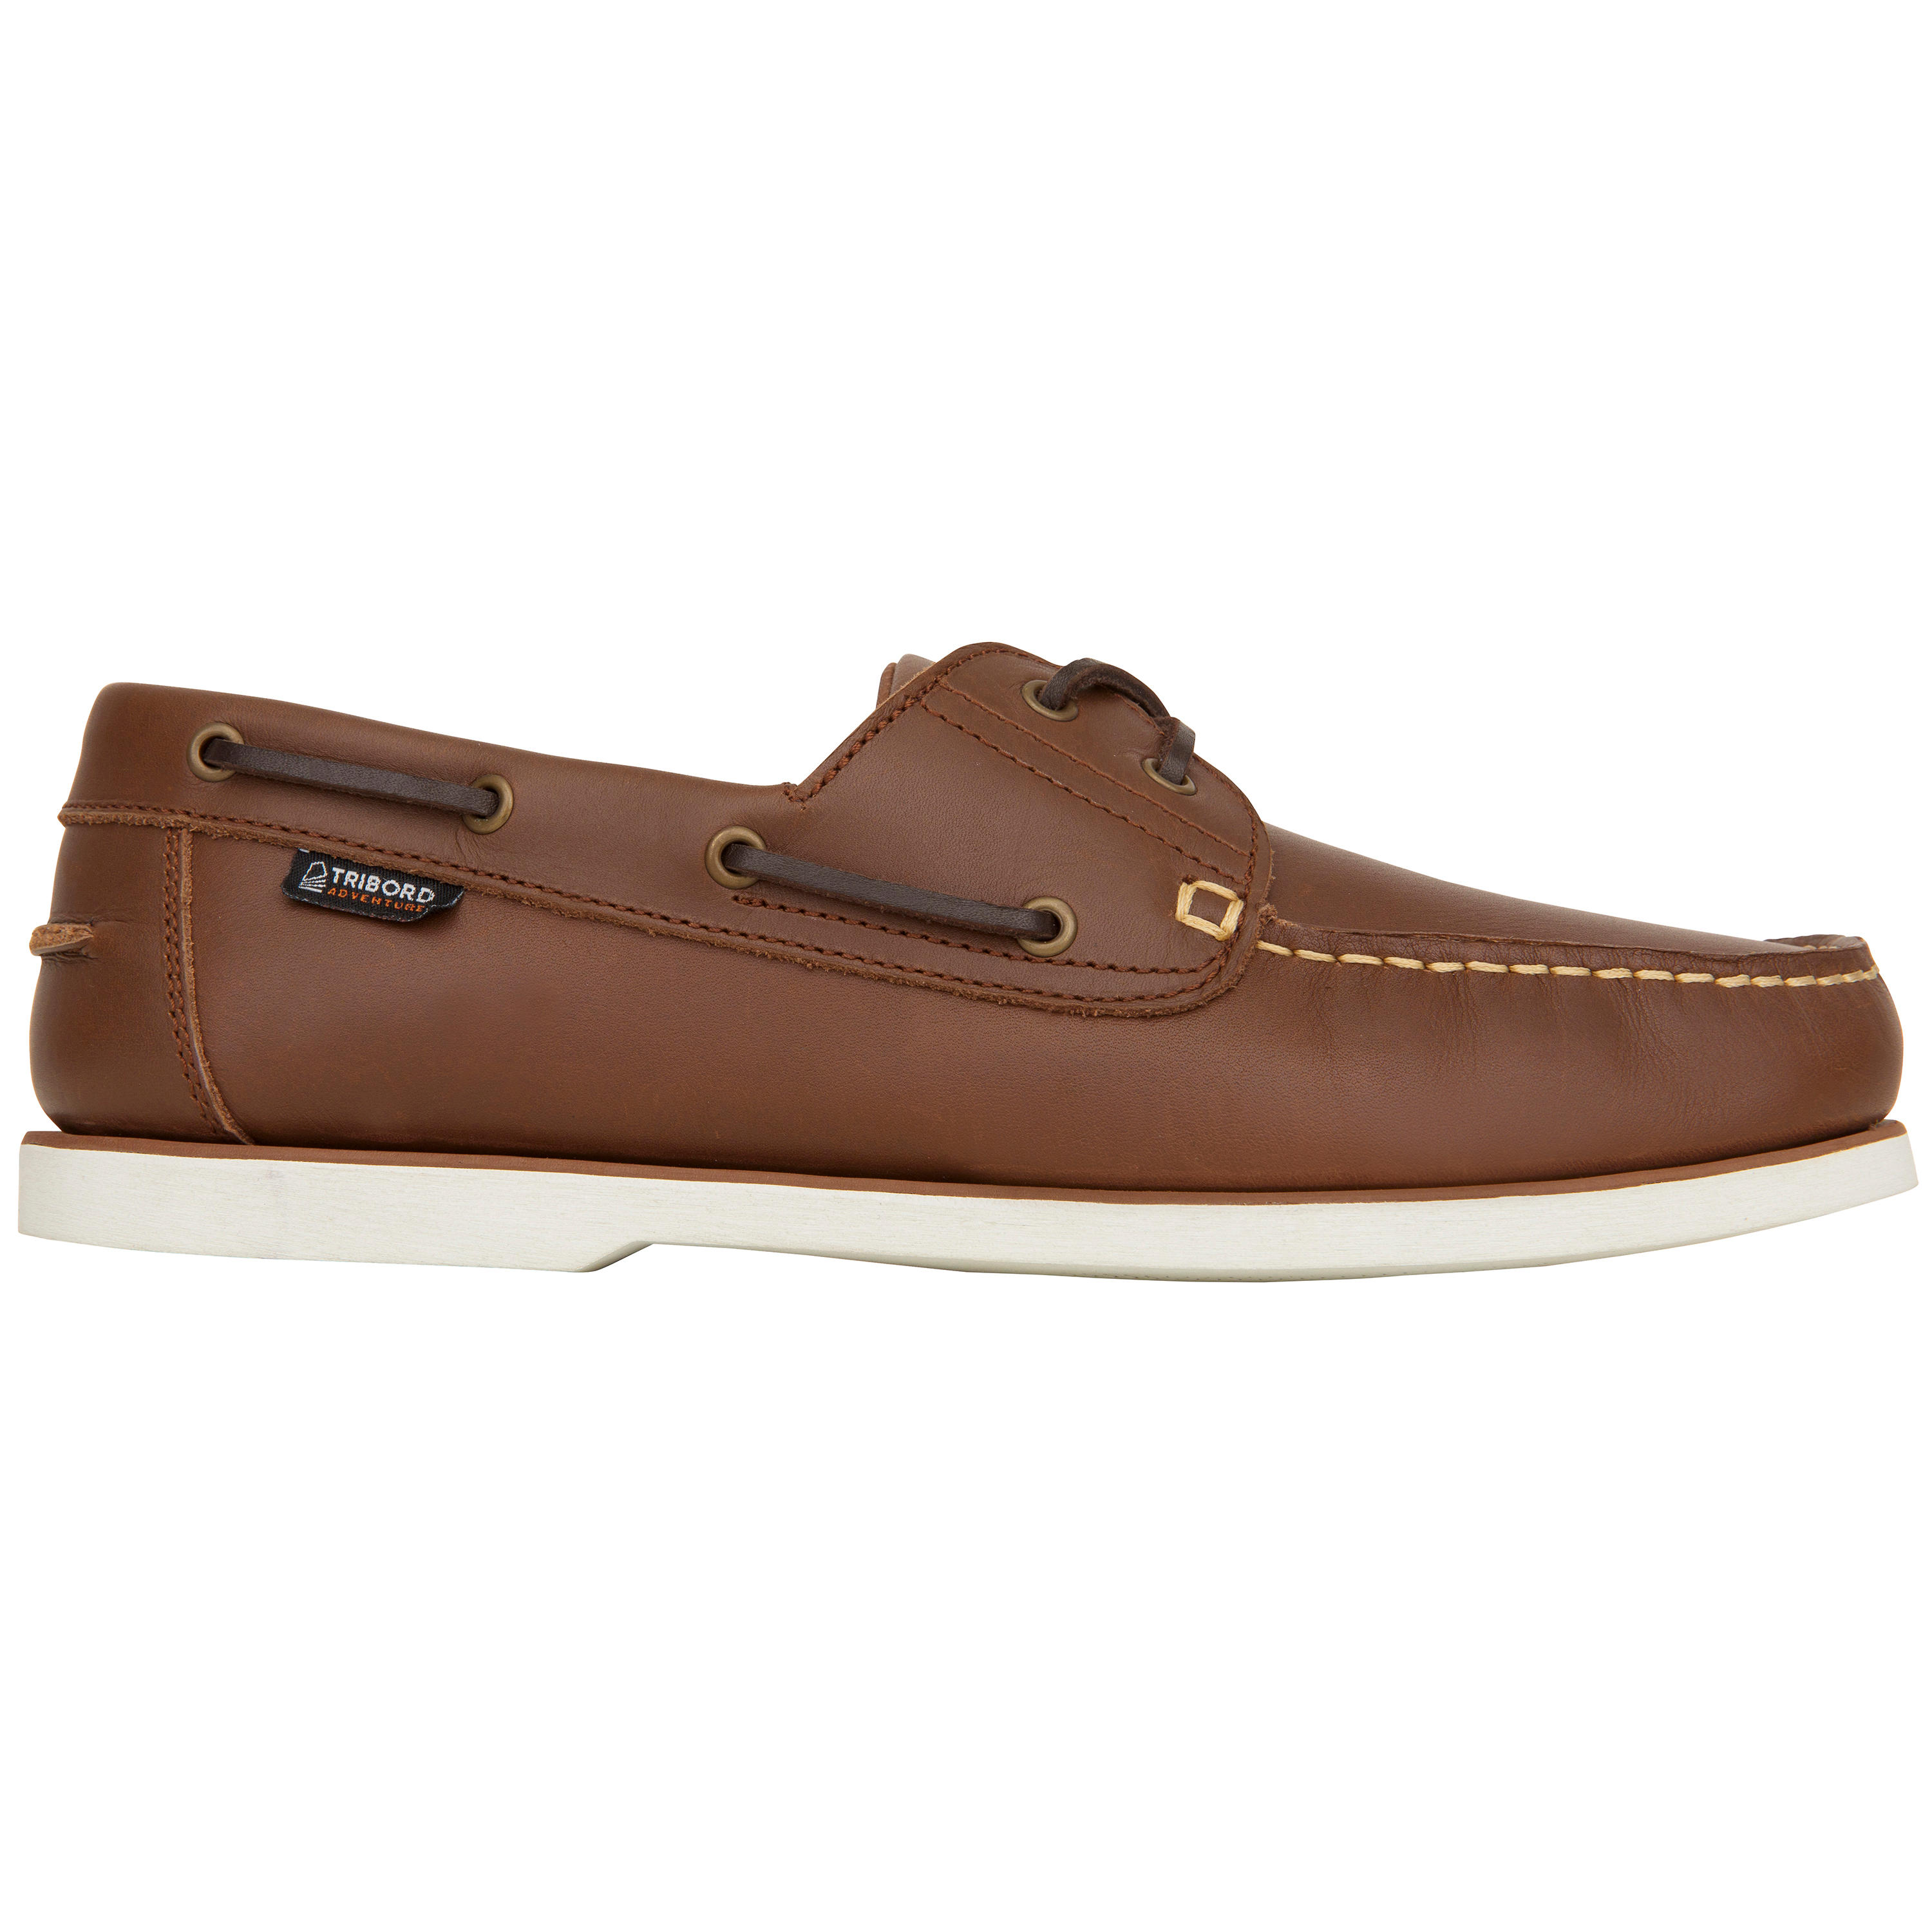 Men’s Sailing boat shoes 500 - Brown 2/9